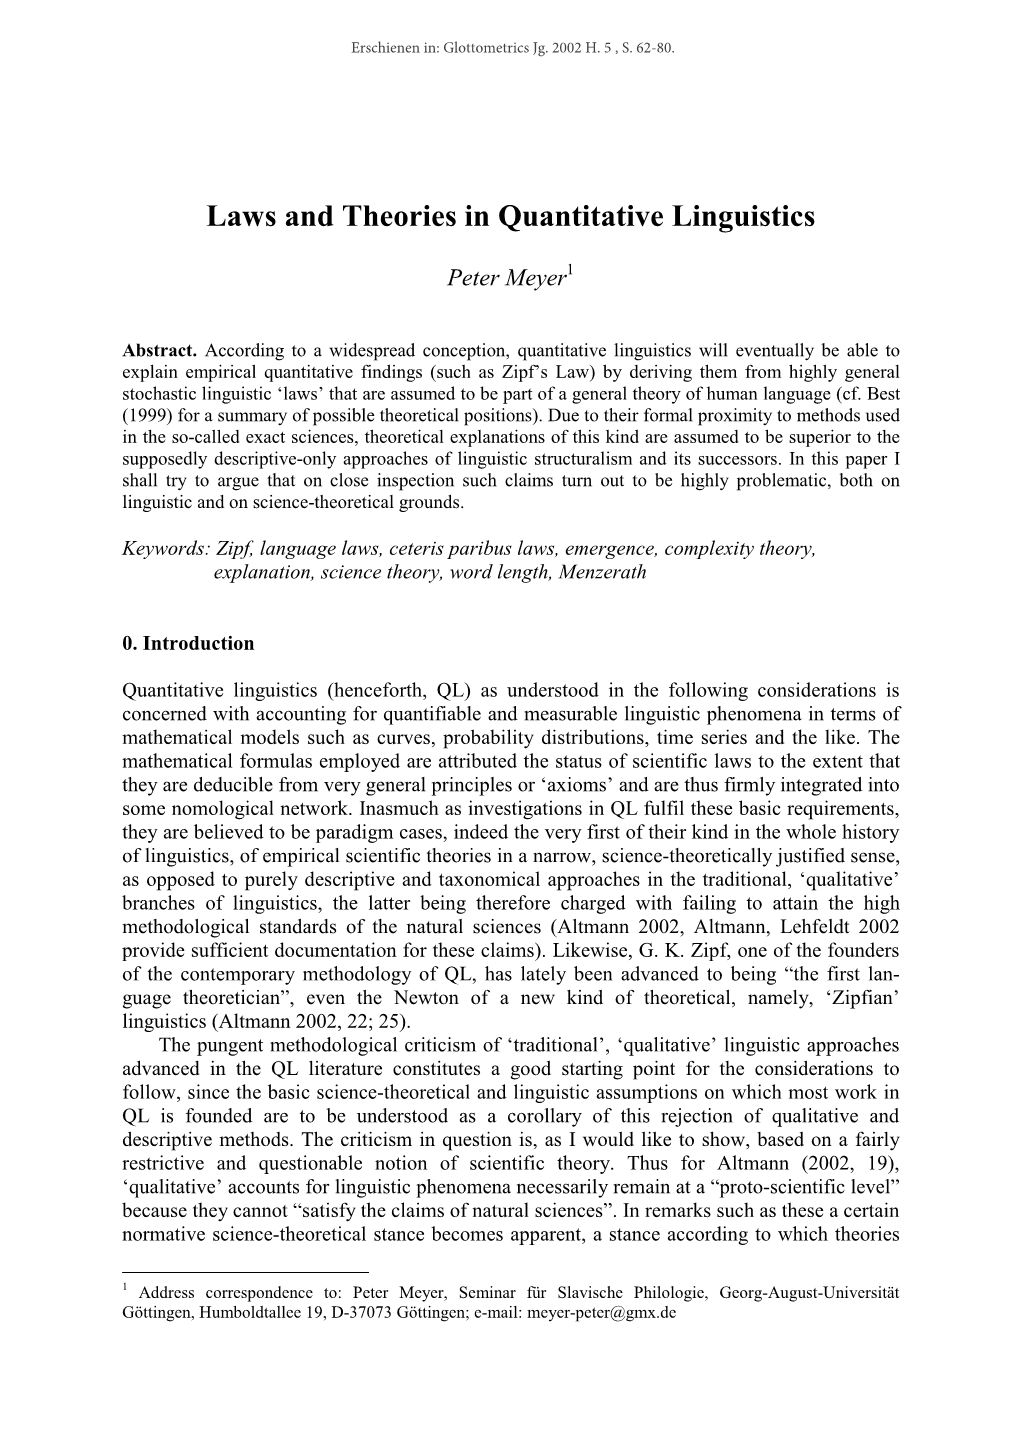 Laws and Theories in Quantitative Linguistics